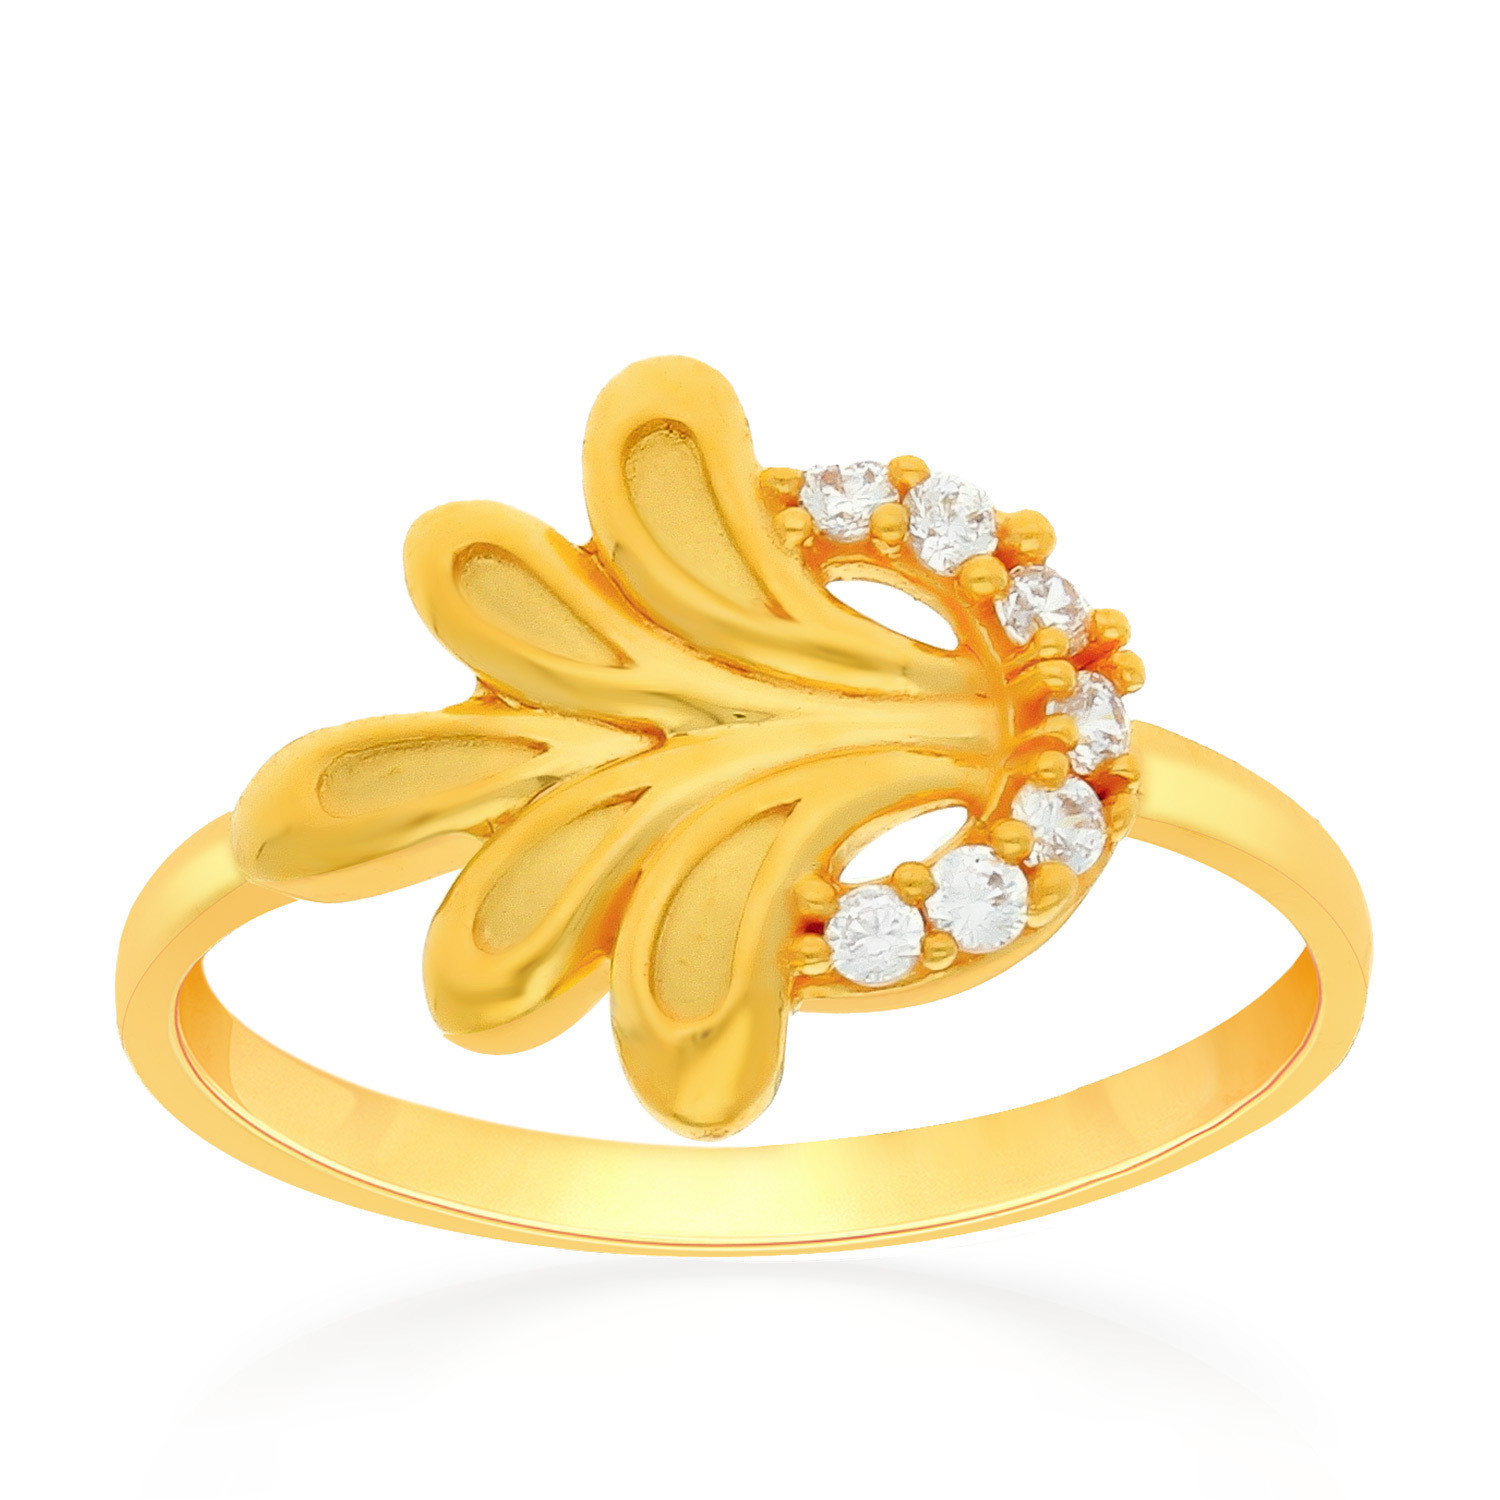 Malabar Gold & Diamonds on Behance | Buy diamond ring, Gold diamond,  Diamond rings design